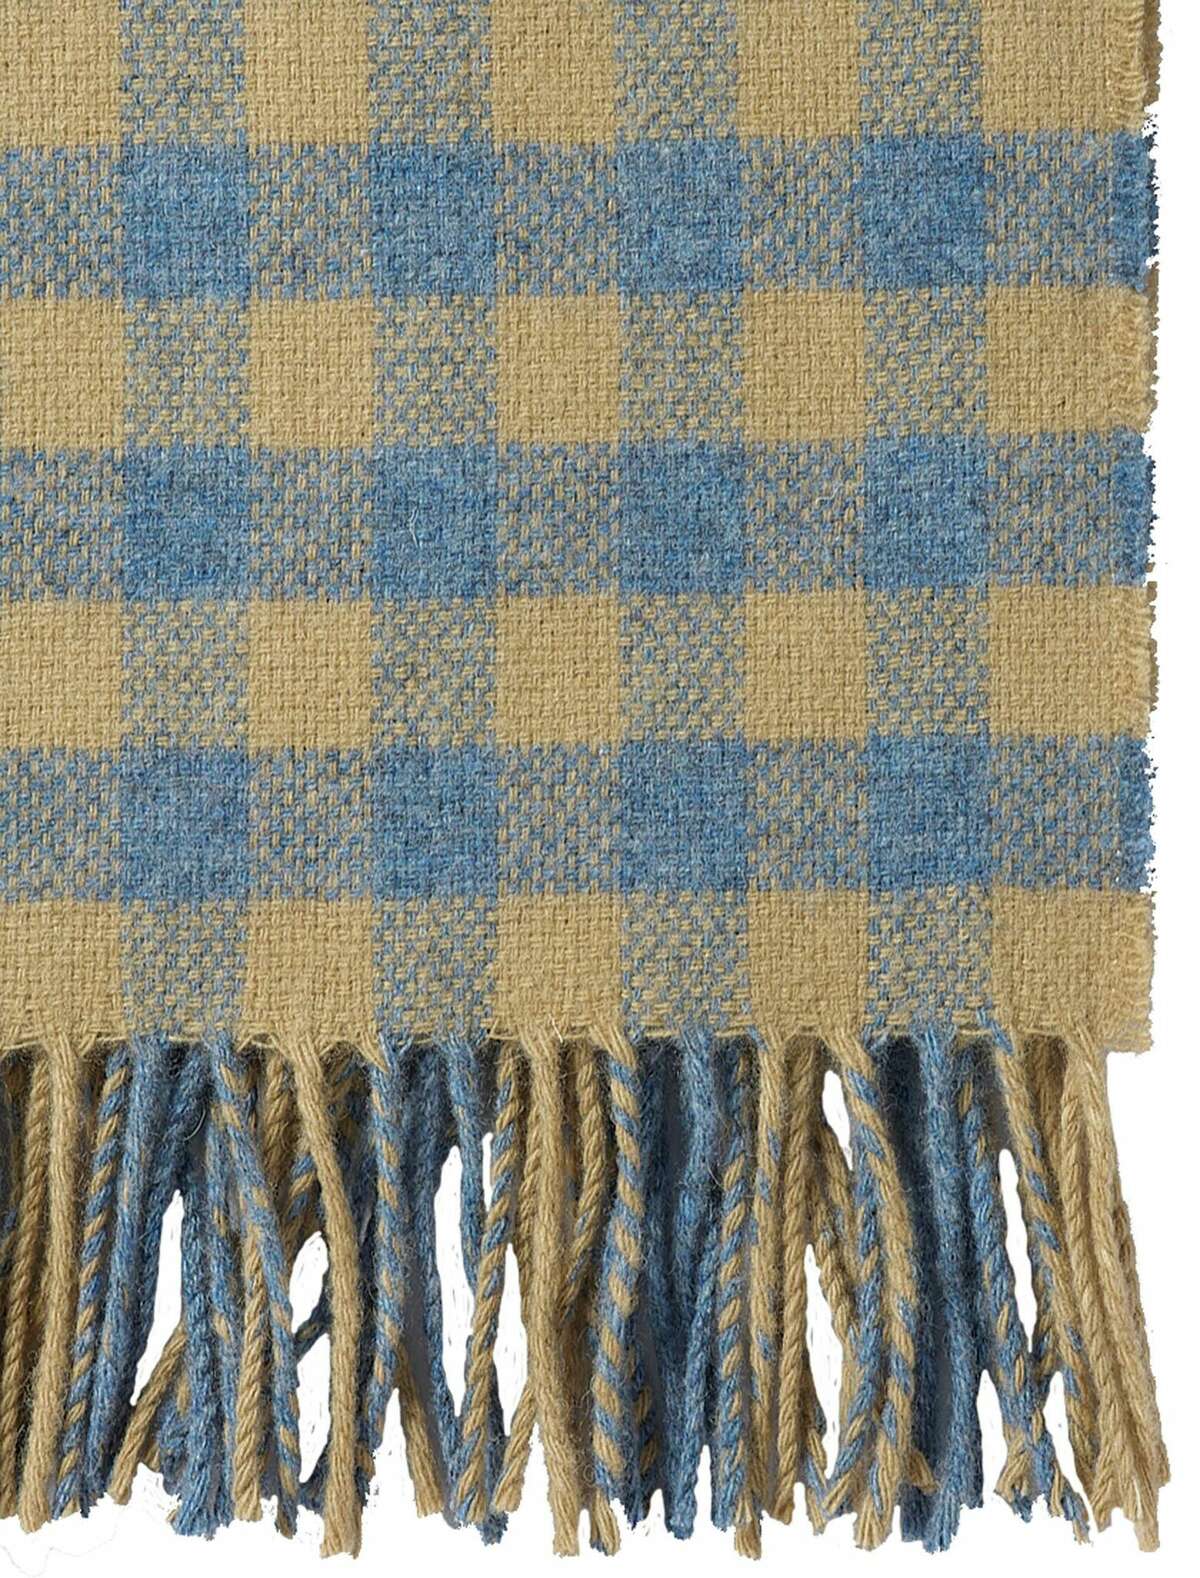 Gingham wool blanket from Nordstrom